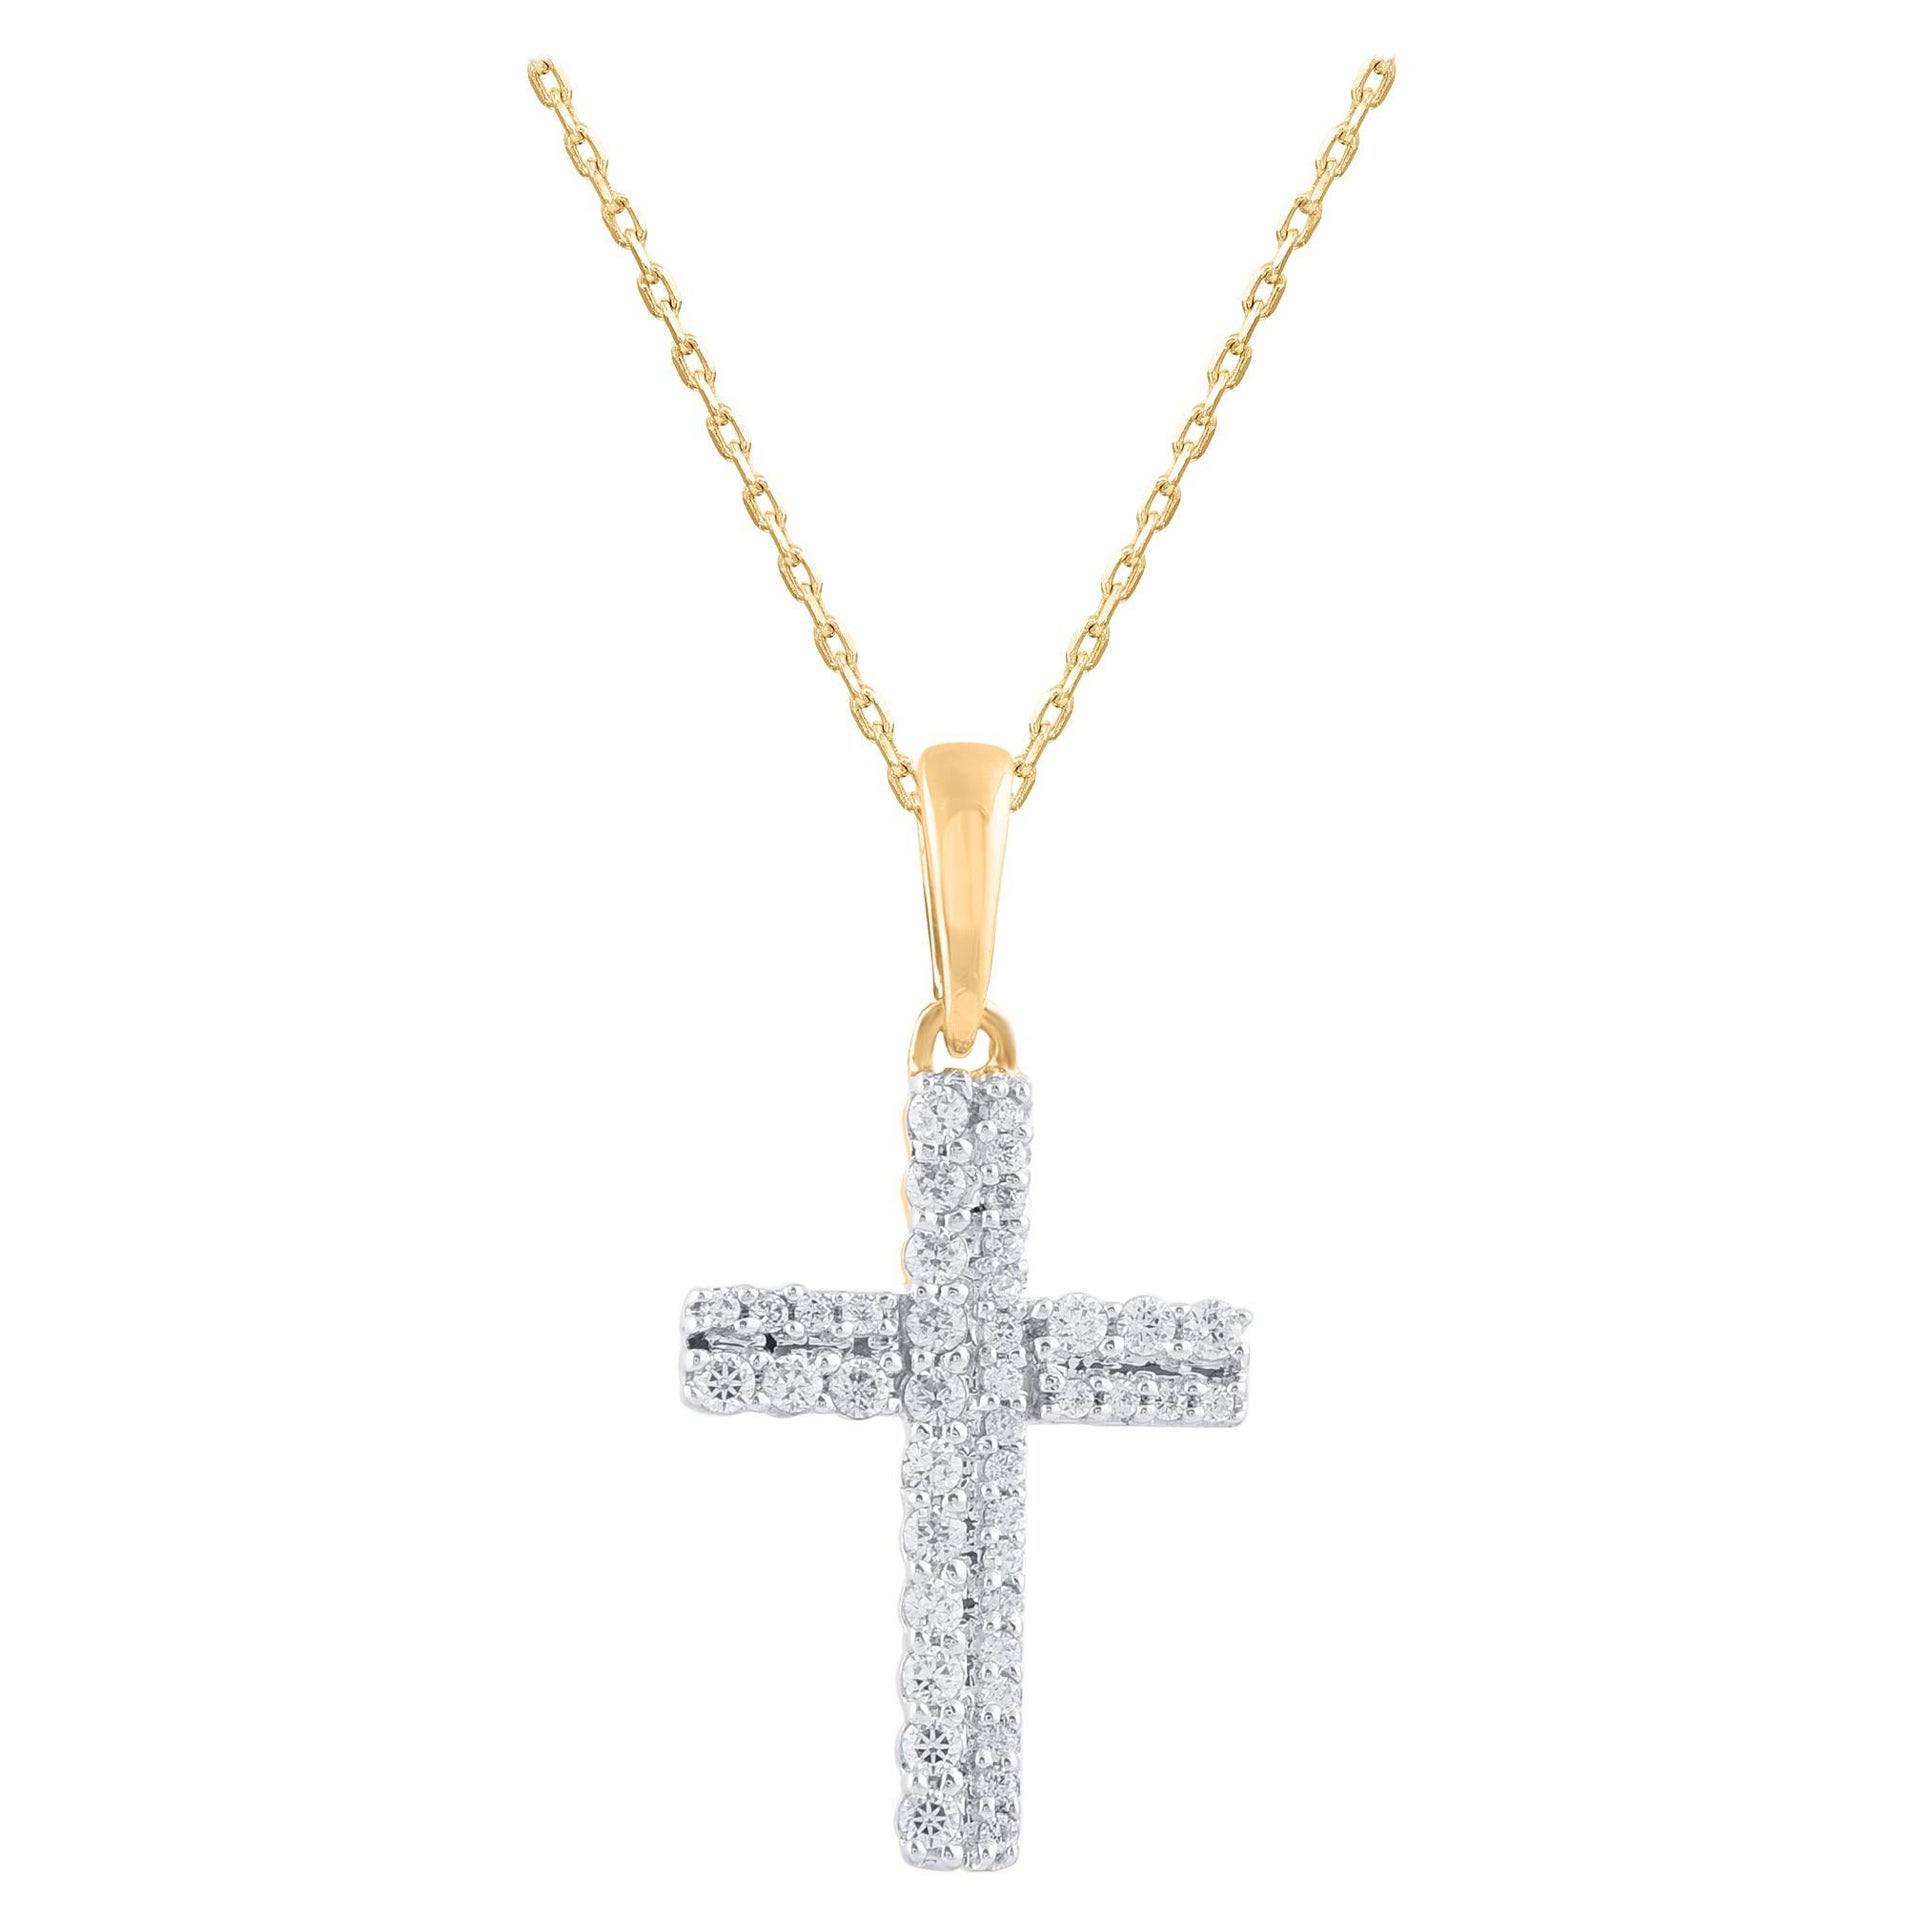 TJD 0.20 Carat Round Cut Diamond Cross Pendant Necklace in 14 Karat Yellow Gold For Sale